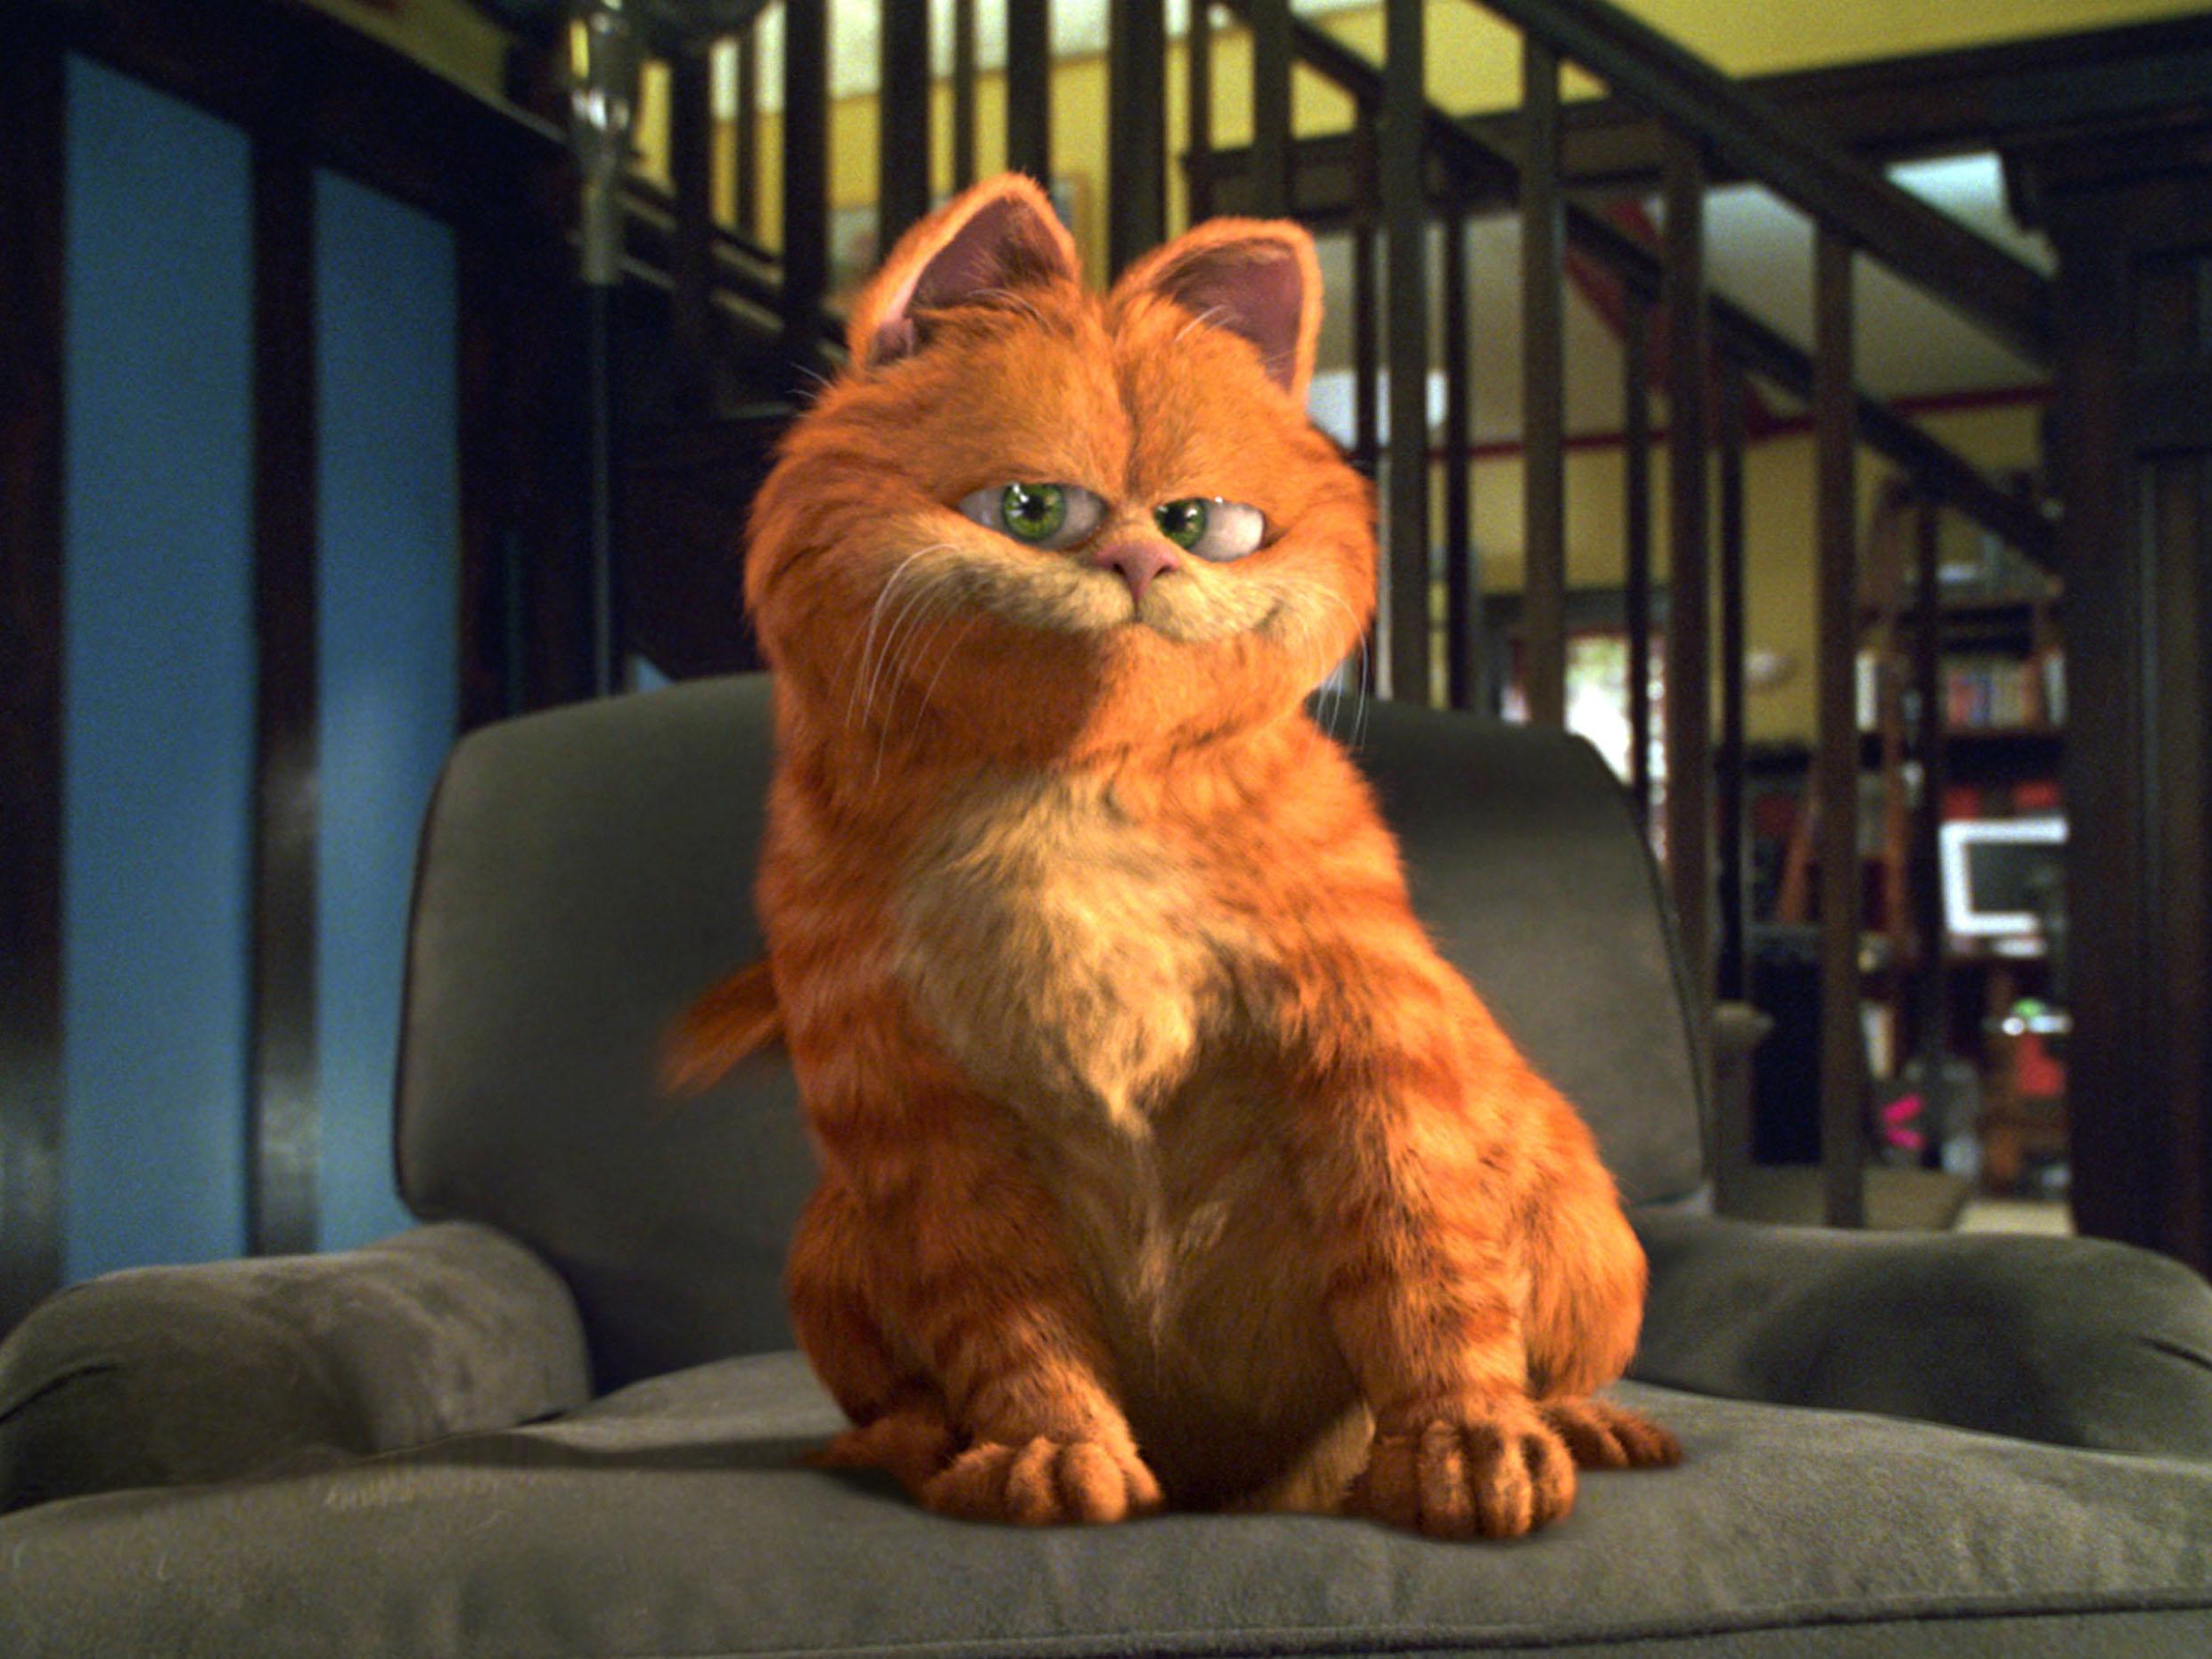 Garfield: Comic strip cat celebrates 40 years of loving lasagne and